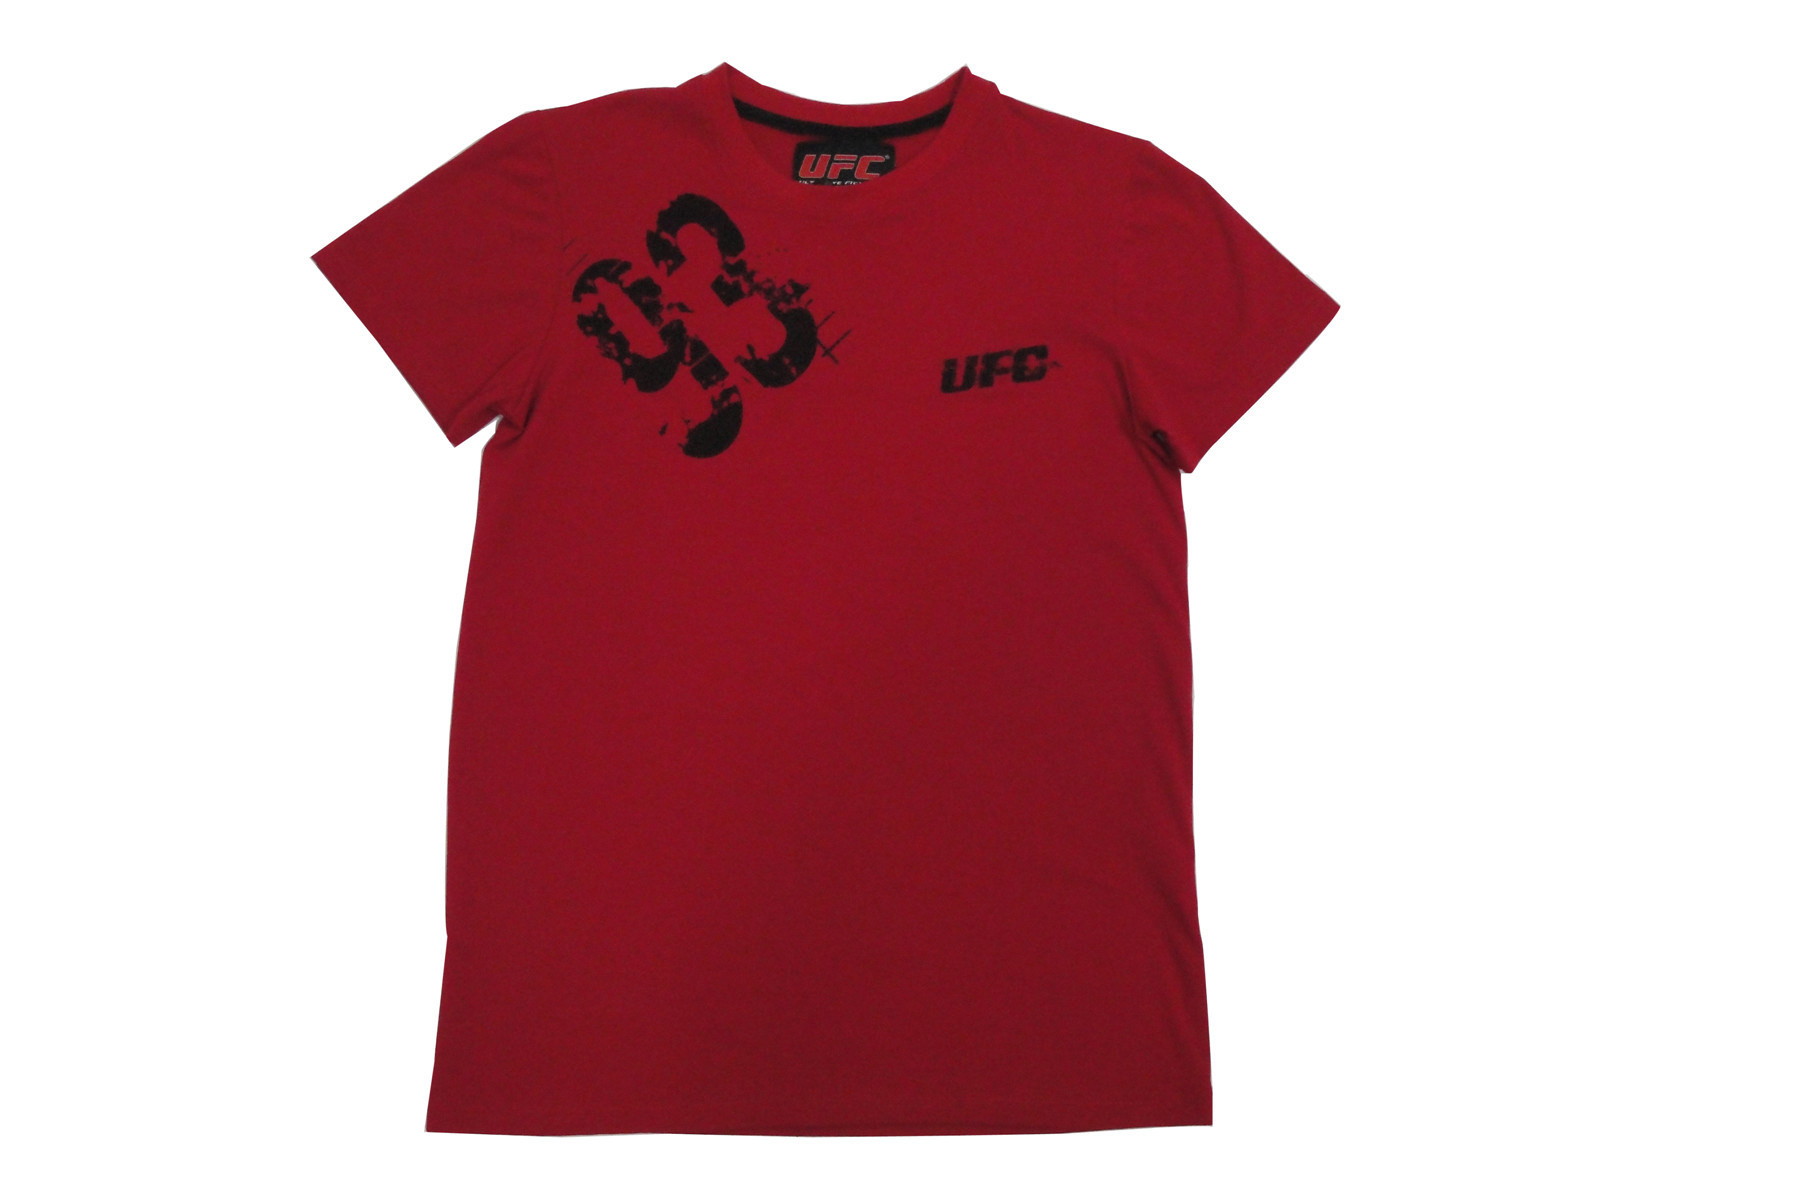 2015 Latest Design Printing Men's T-Shirt for Fashion Clothing (HL-03)